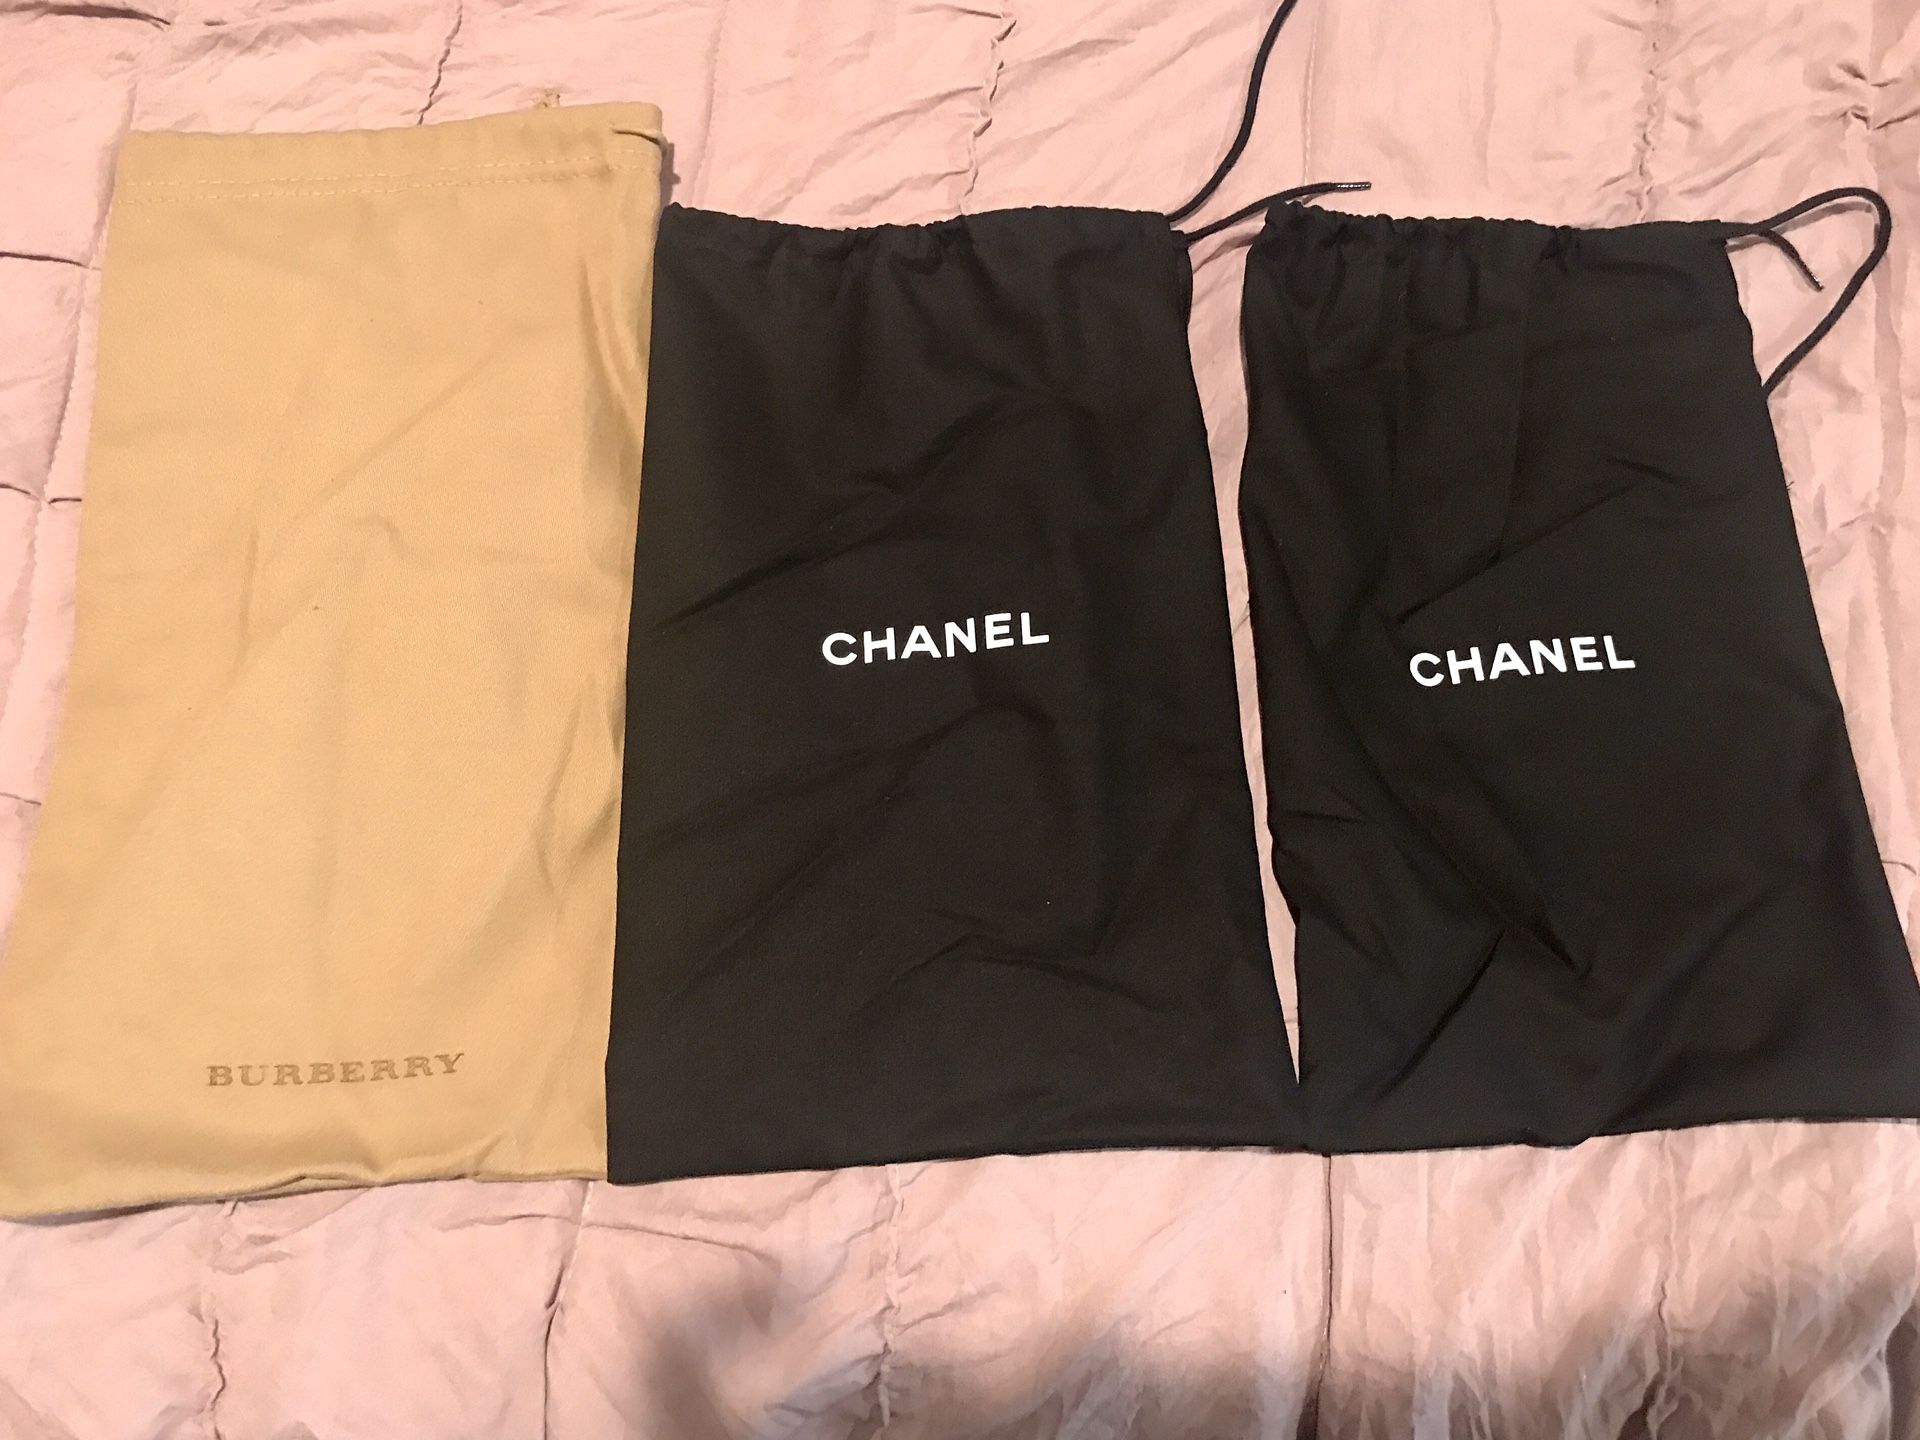 Chanel, Burberry Dust Cloth Bag